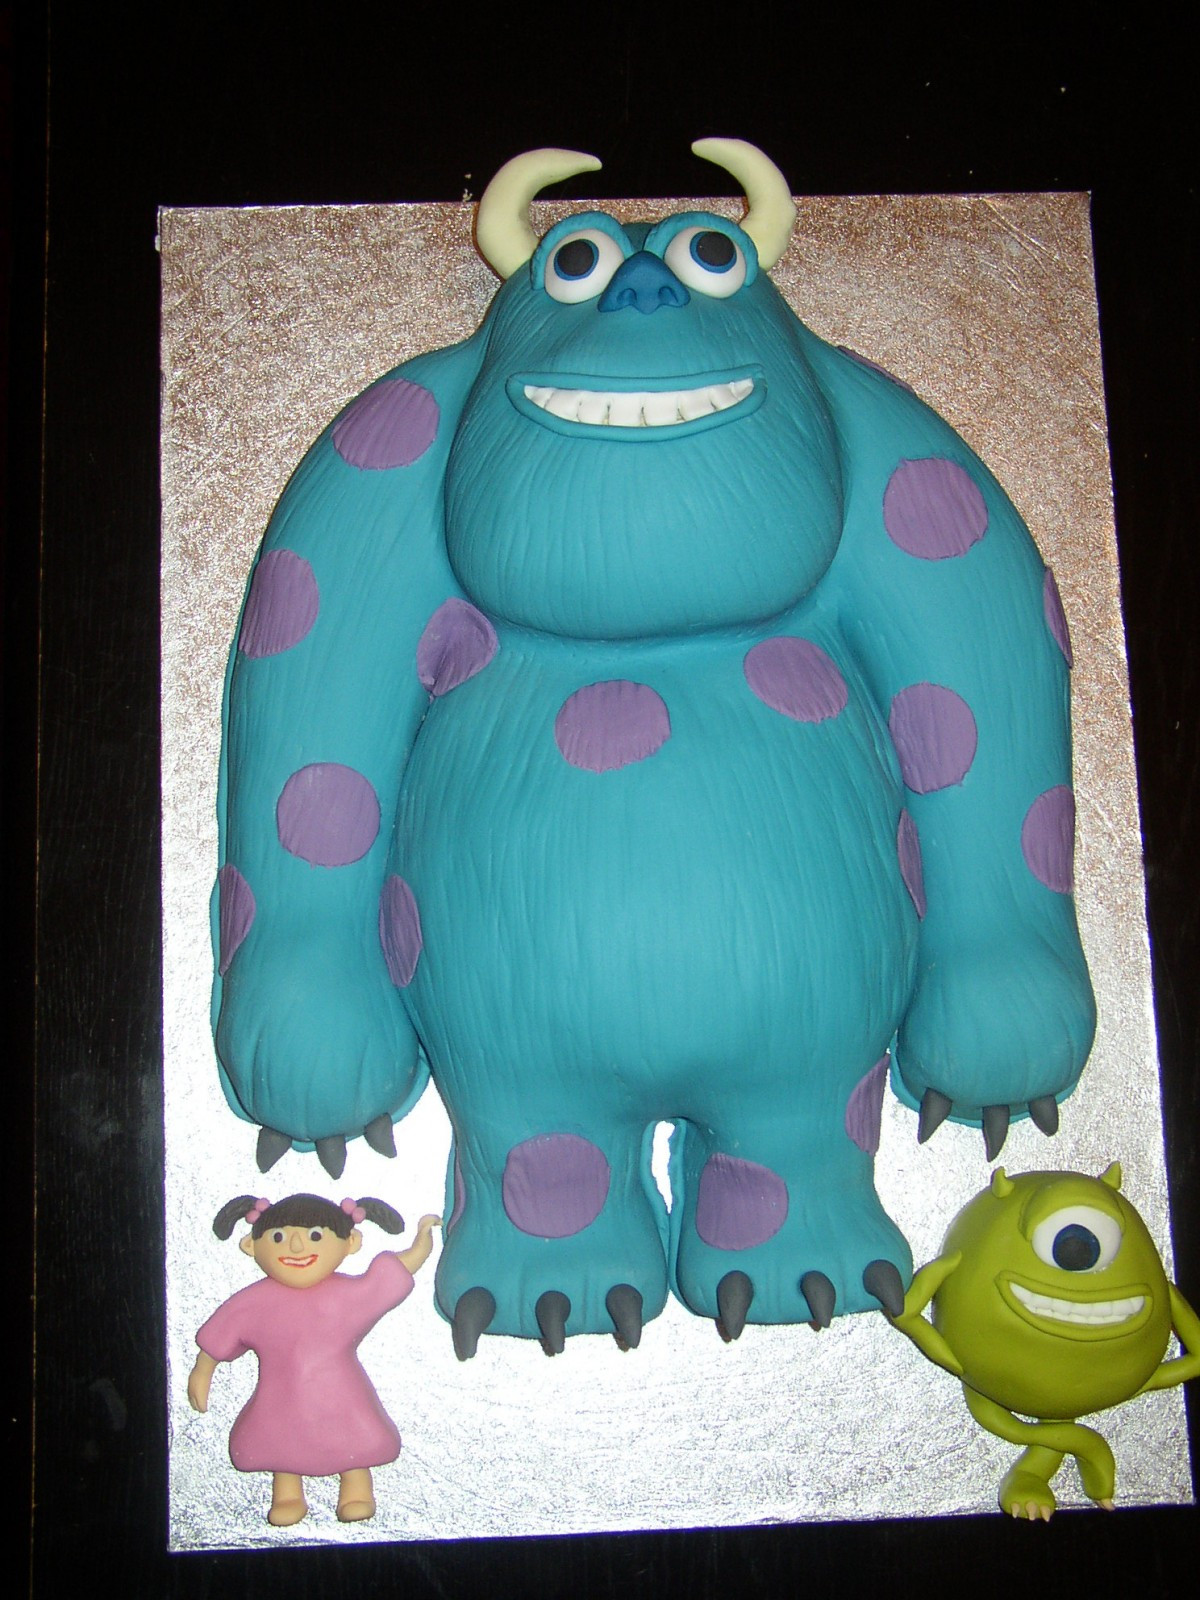 Monsters Inc Birthday Cake
 Monsters Inc Inspired Birthday Cake Susie s Cakes